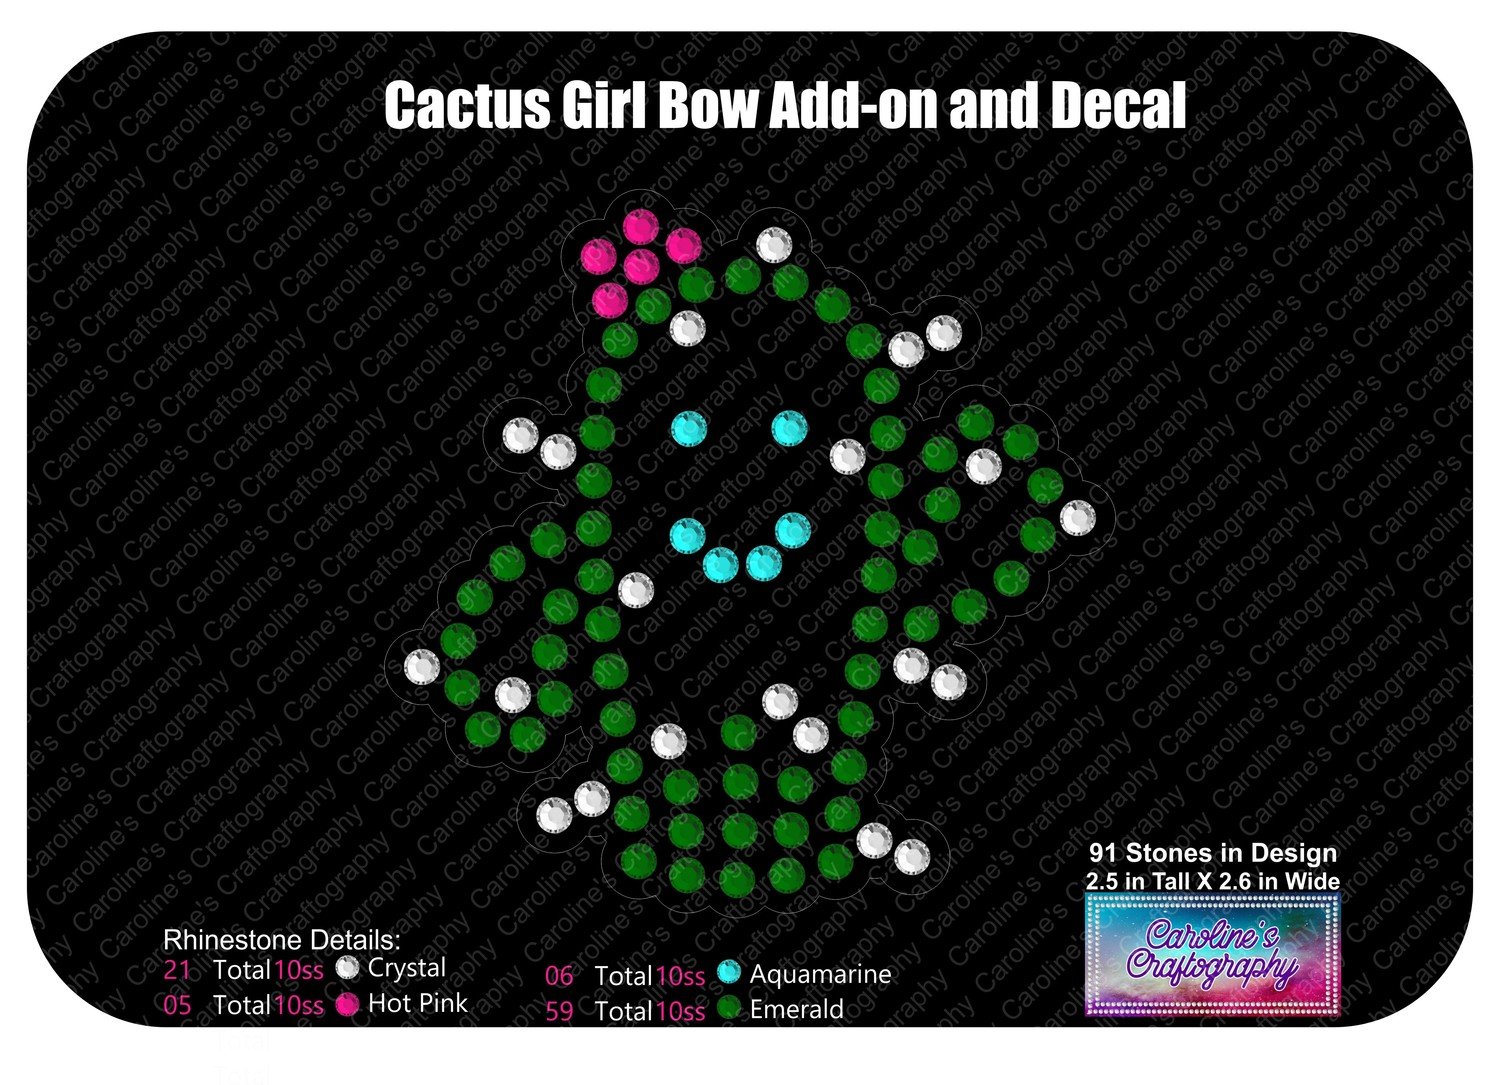 Cactus Girl Decal or Bow add-on Rhinestone